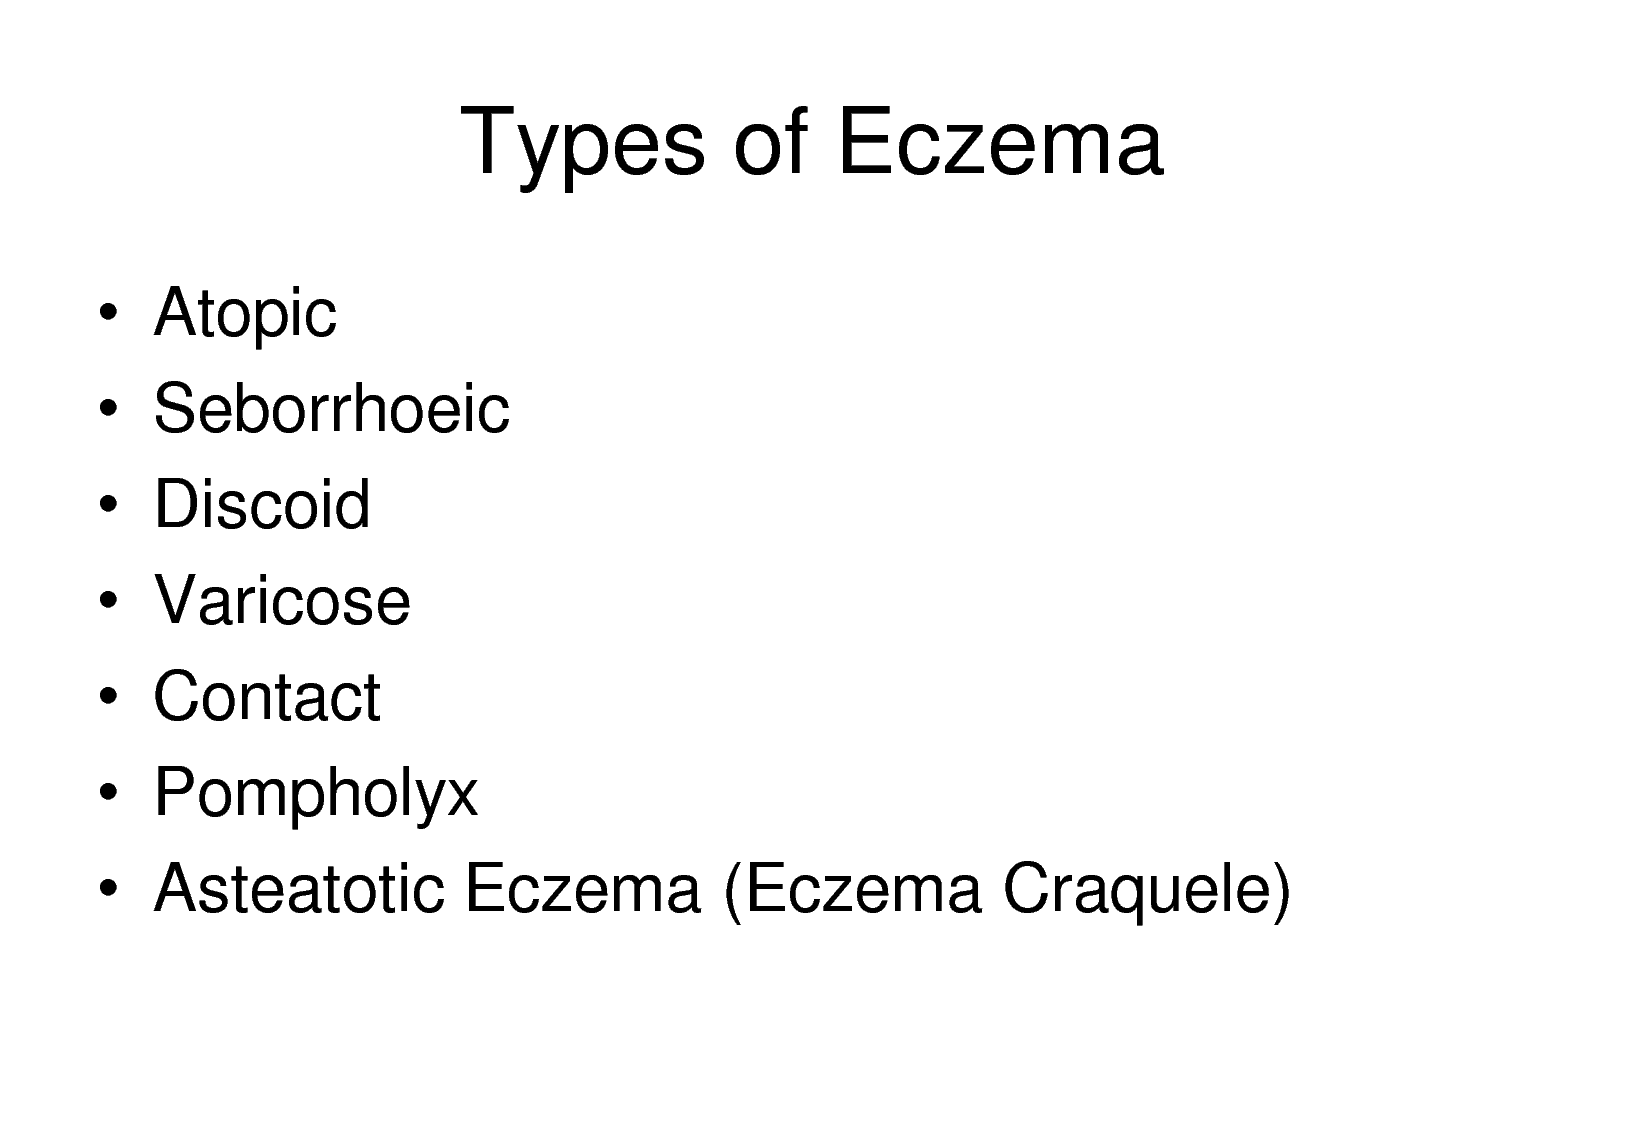 Eczema types